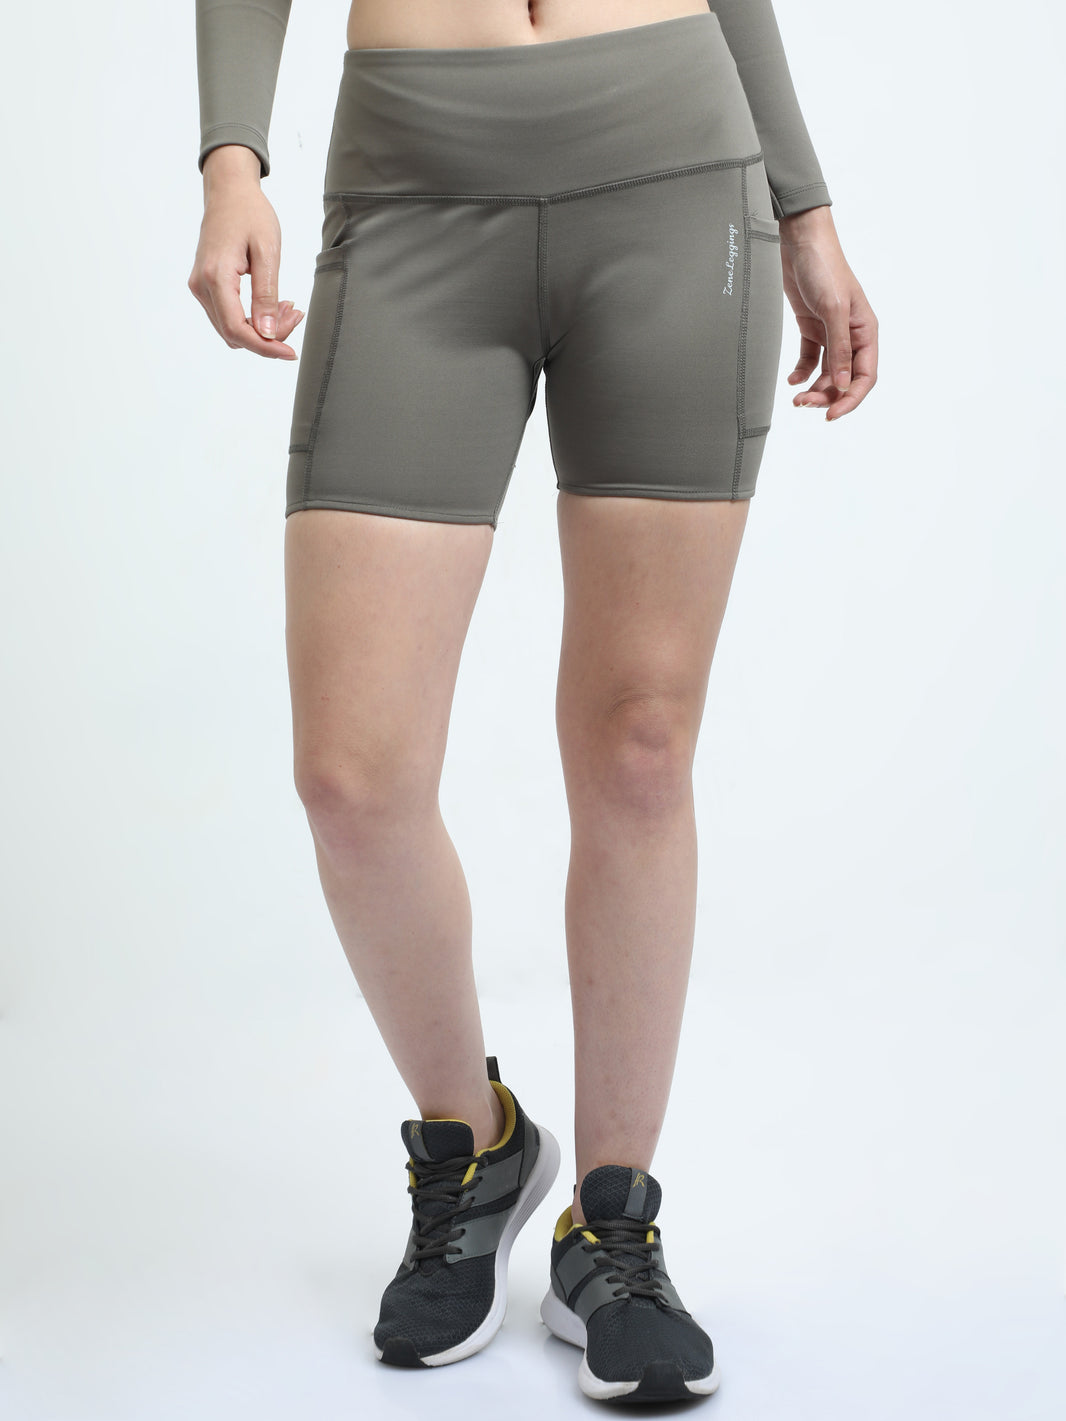 Women's Activewear Pocket Shorts